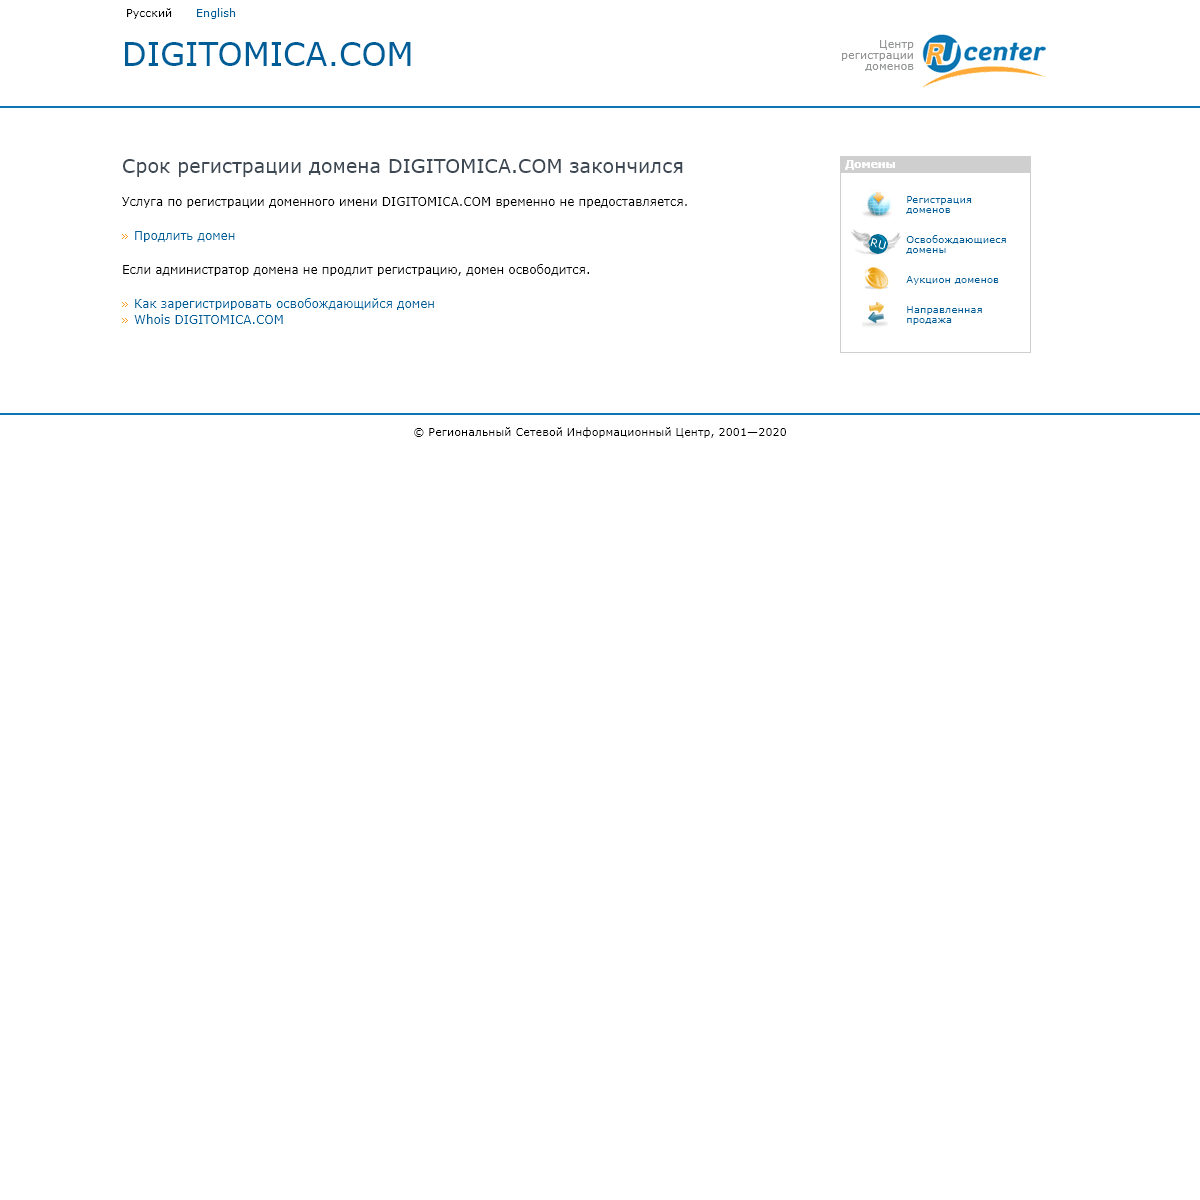 A complete backup of digitomica.com